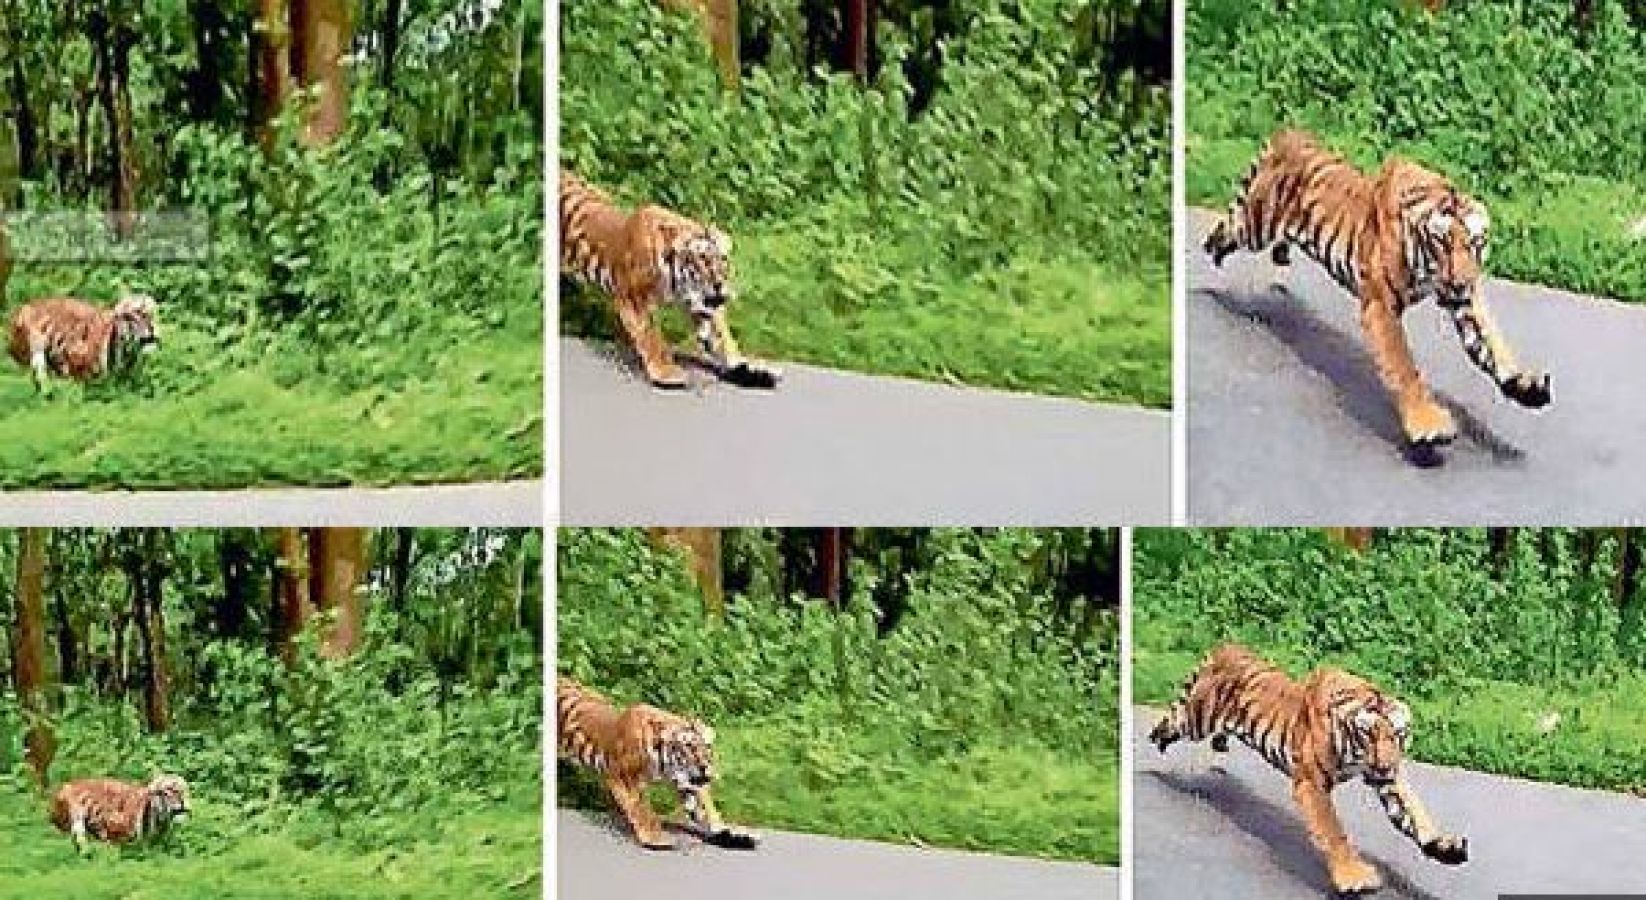 Tiger chase down bikers in Wayanad, Kerala | NewsTrack English 1